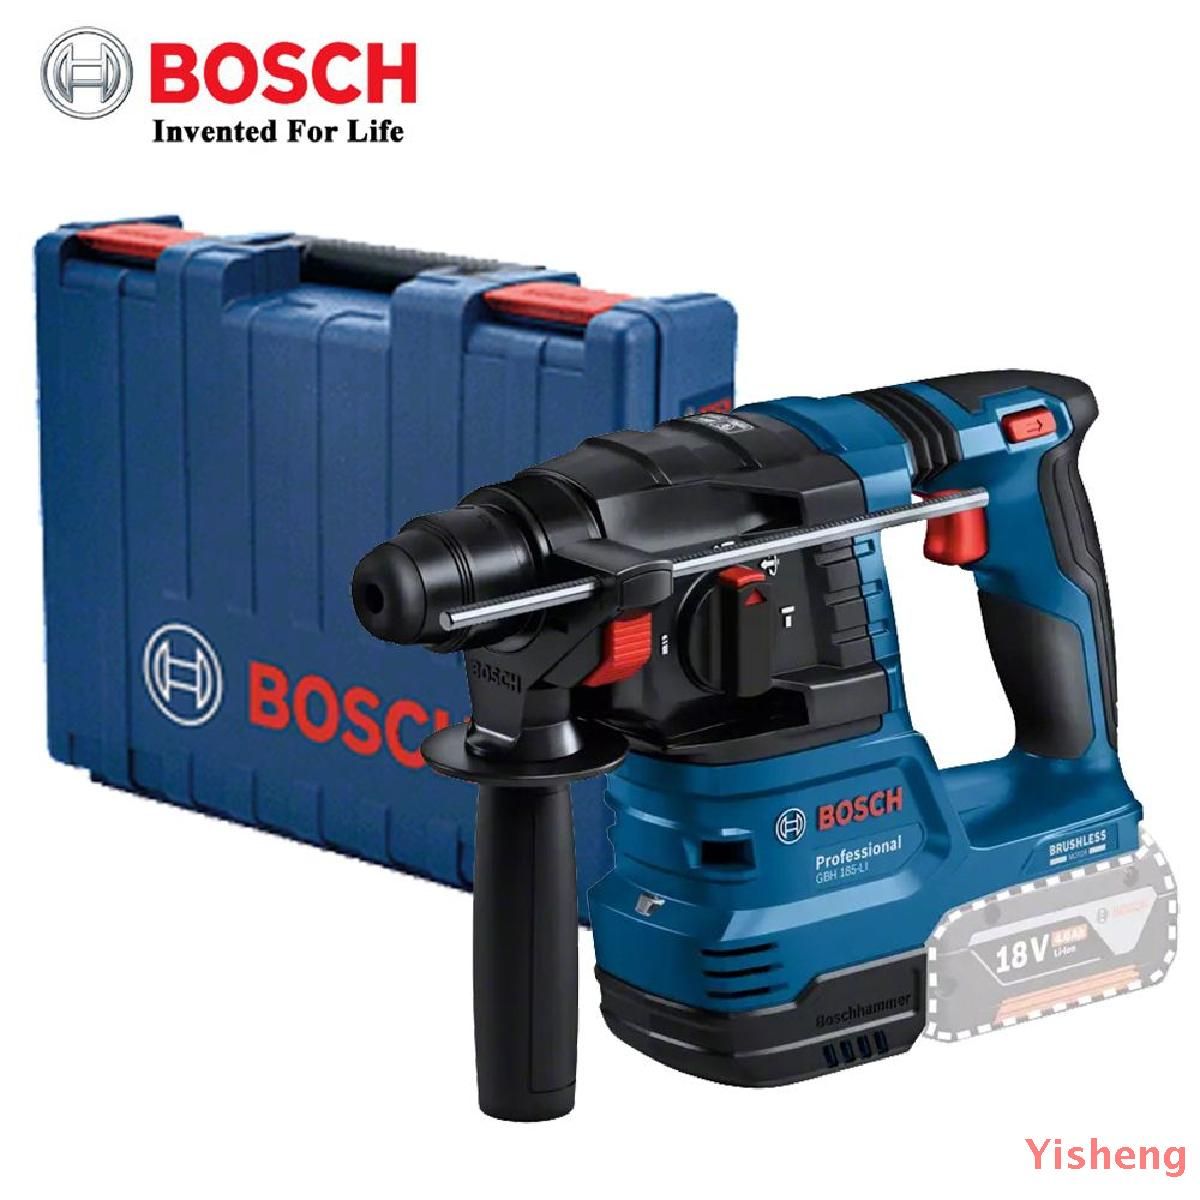 BoschПерфораторОтаккумулятора,0акк.